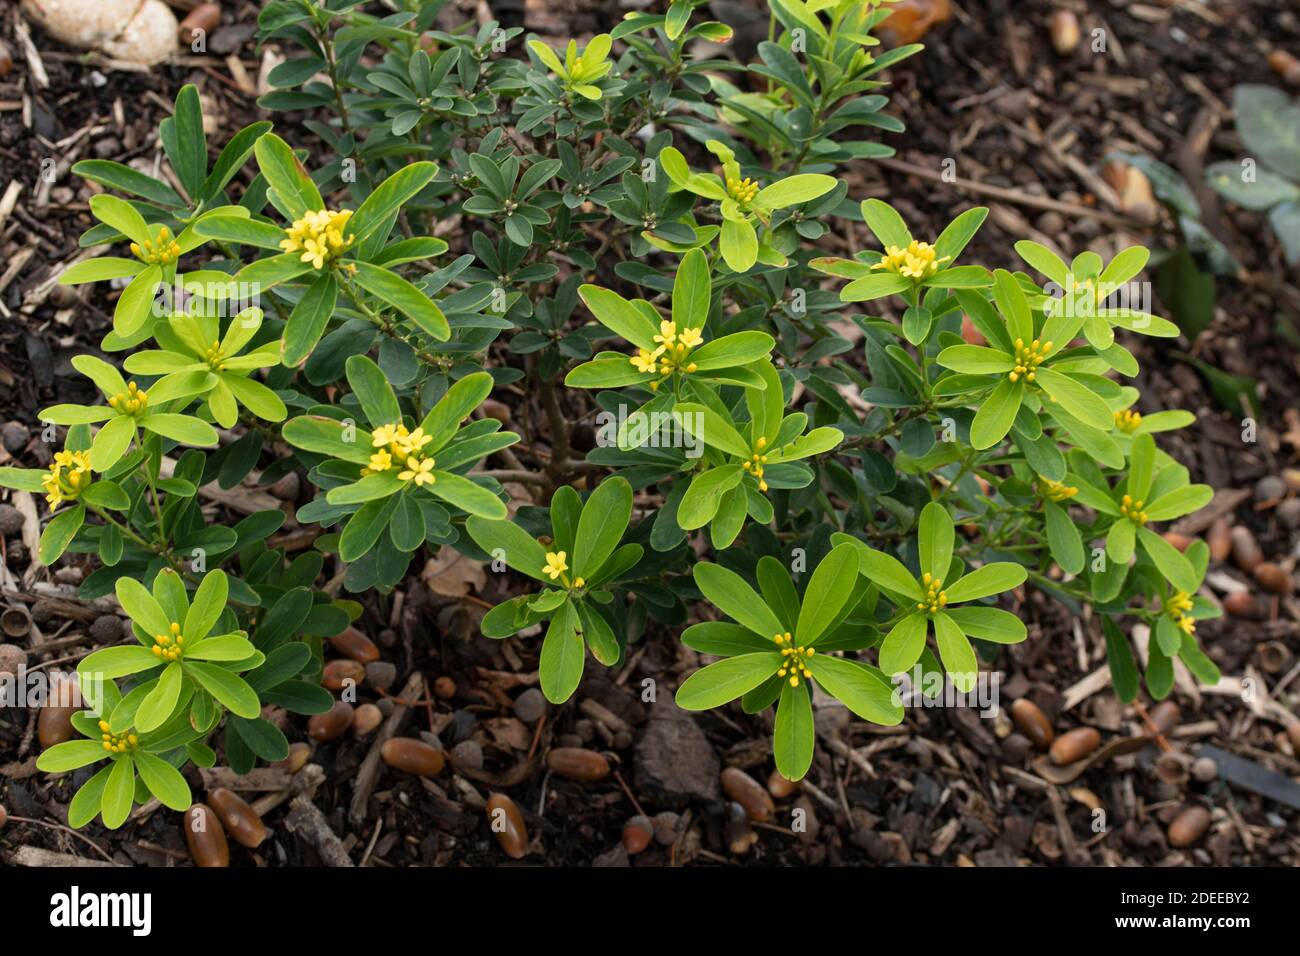 Daphne Gemmata ‘Royal Crown’ shrub showing yellow flowers, natural plant portrait Stock Photo